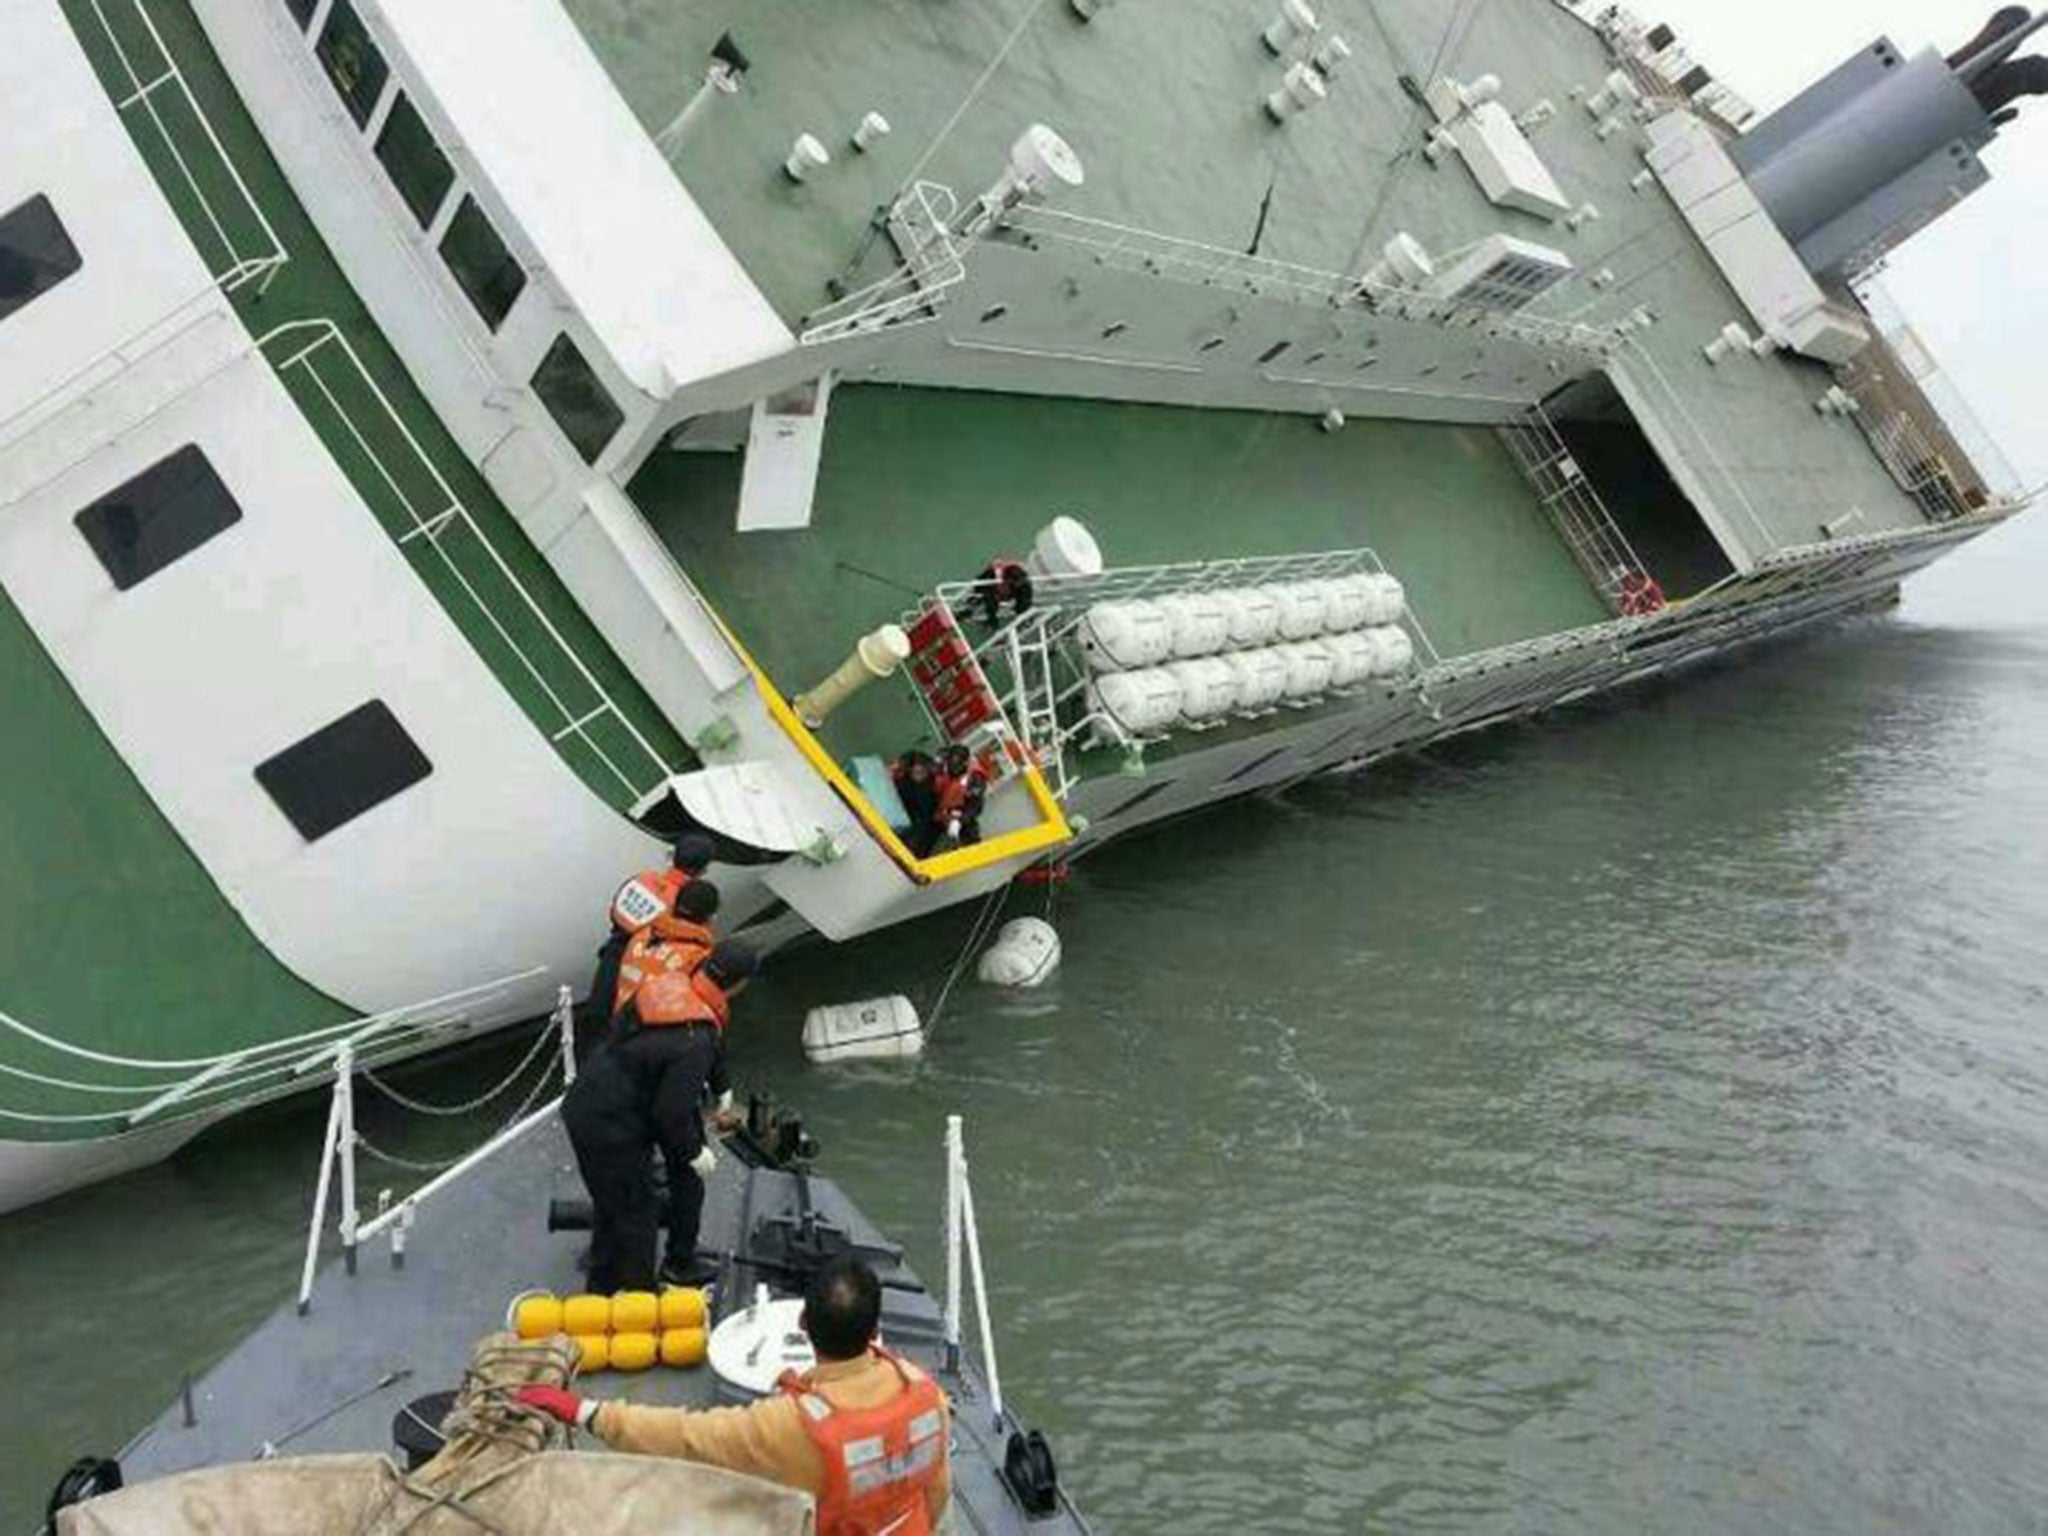 South Korea coast guard head to stricken passengers aboard the sinking ship